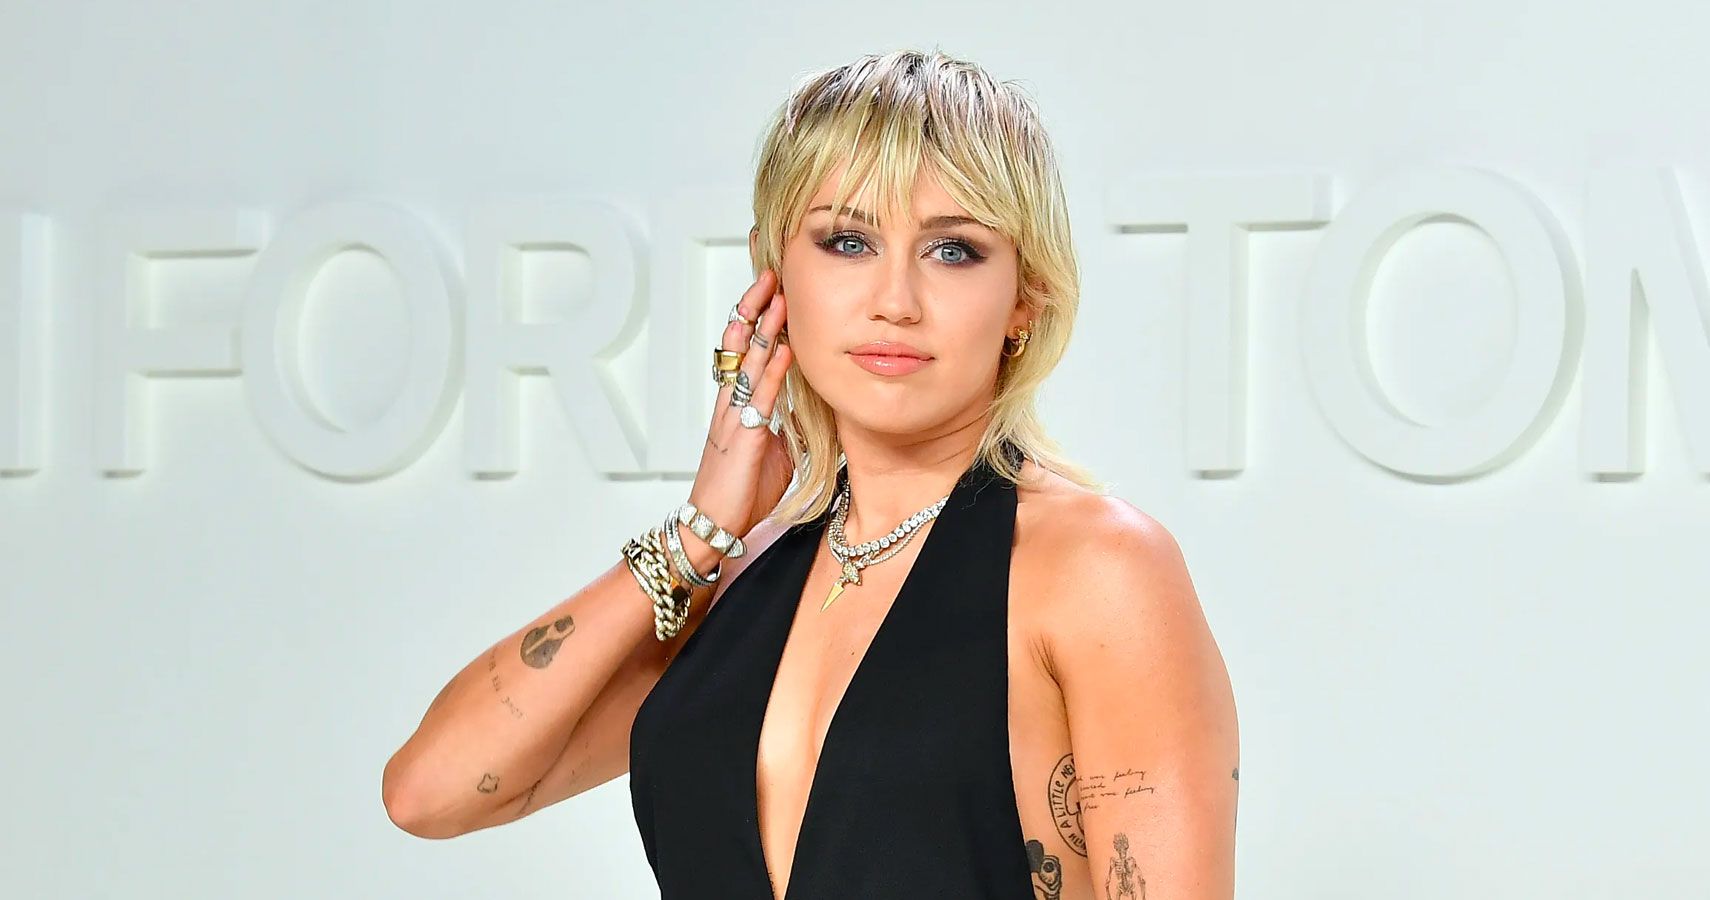 Mova-se Ellen DeGeneres … Miley Cyrus planeja assumir o controle do talk show